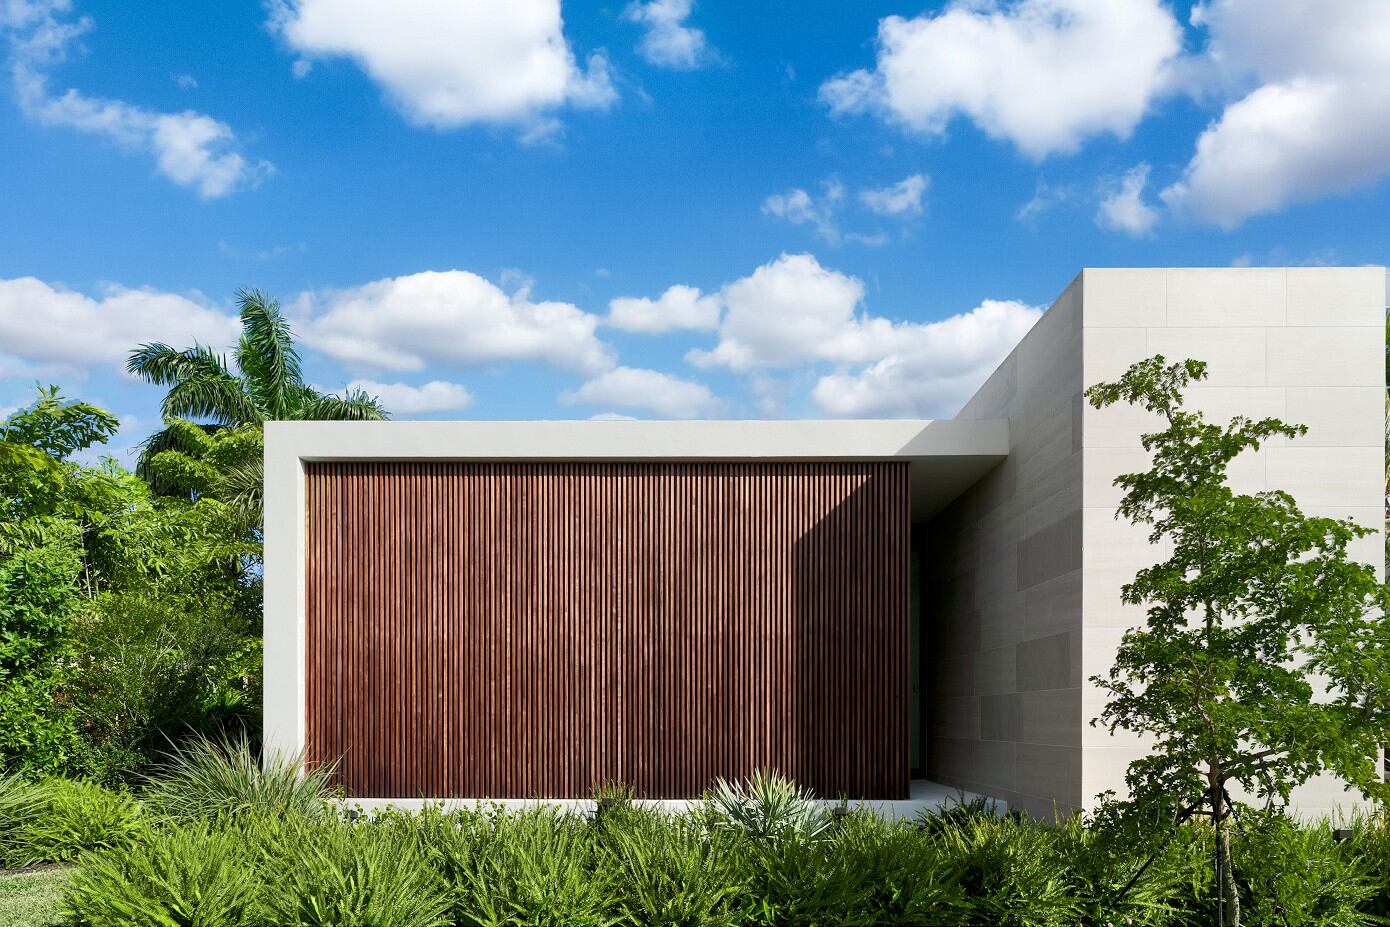 Weston Residence by Choeff Levy Fischman Architecture + Design